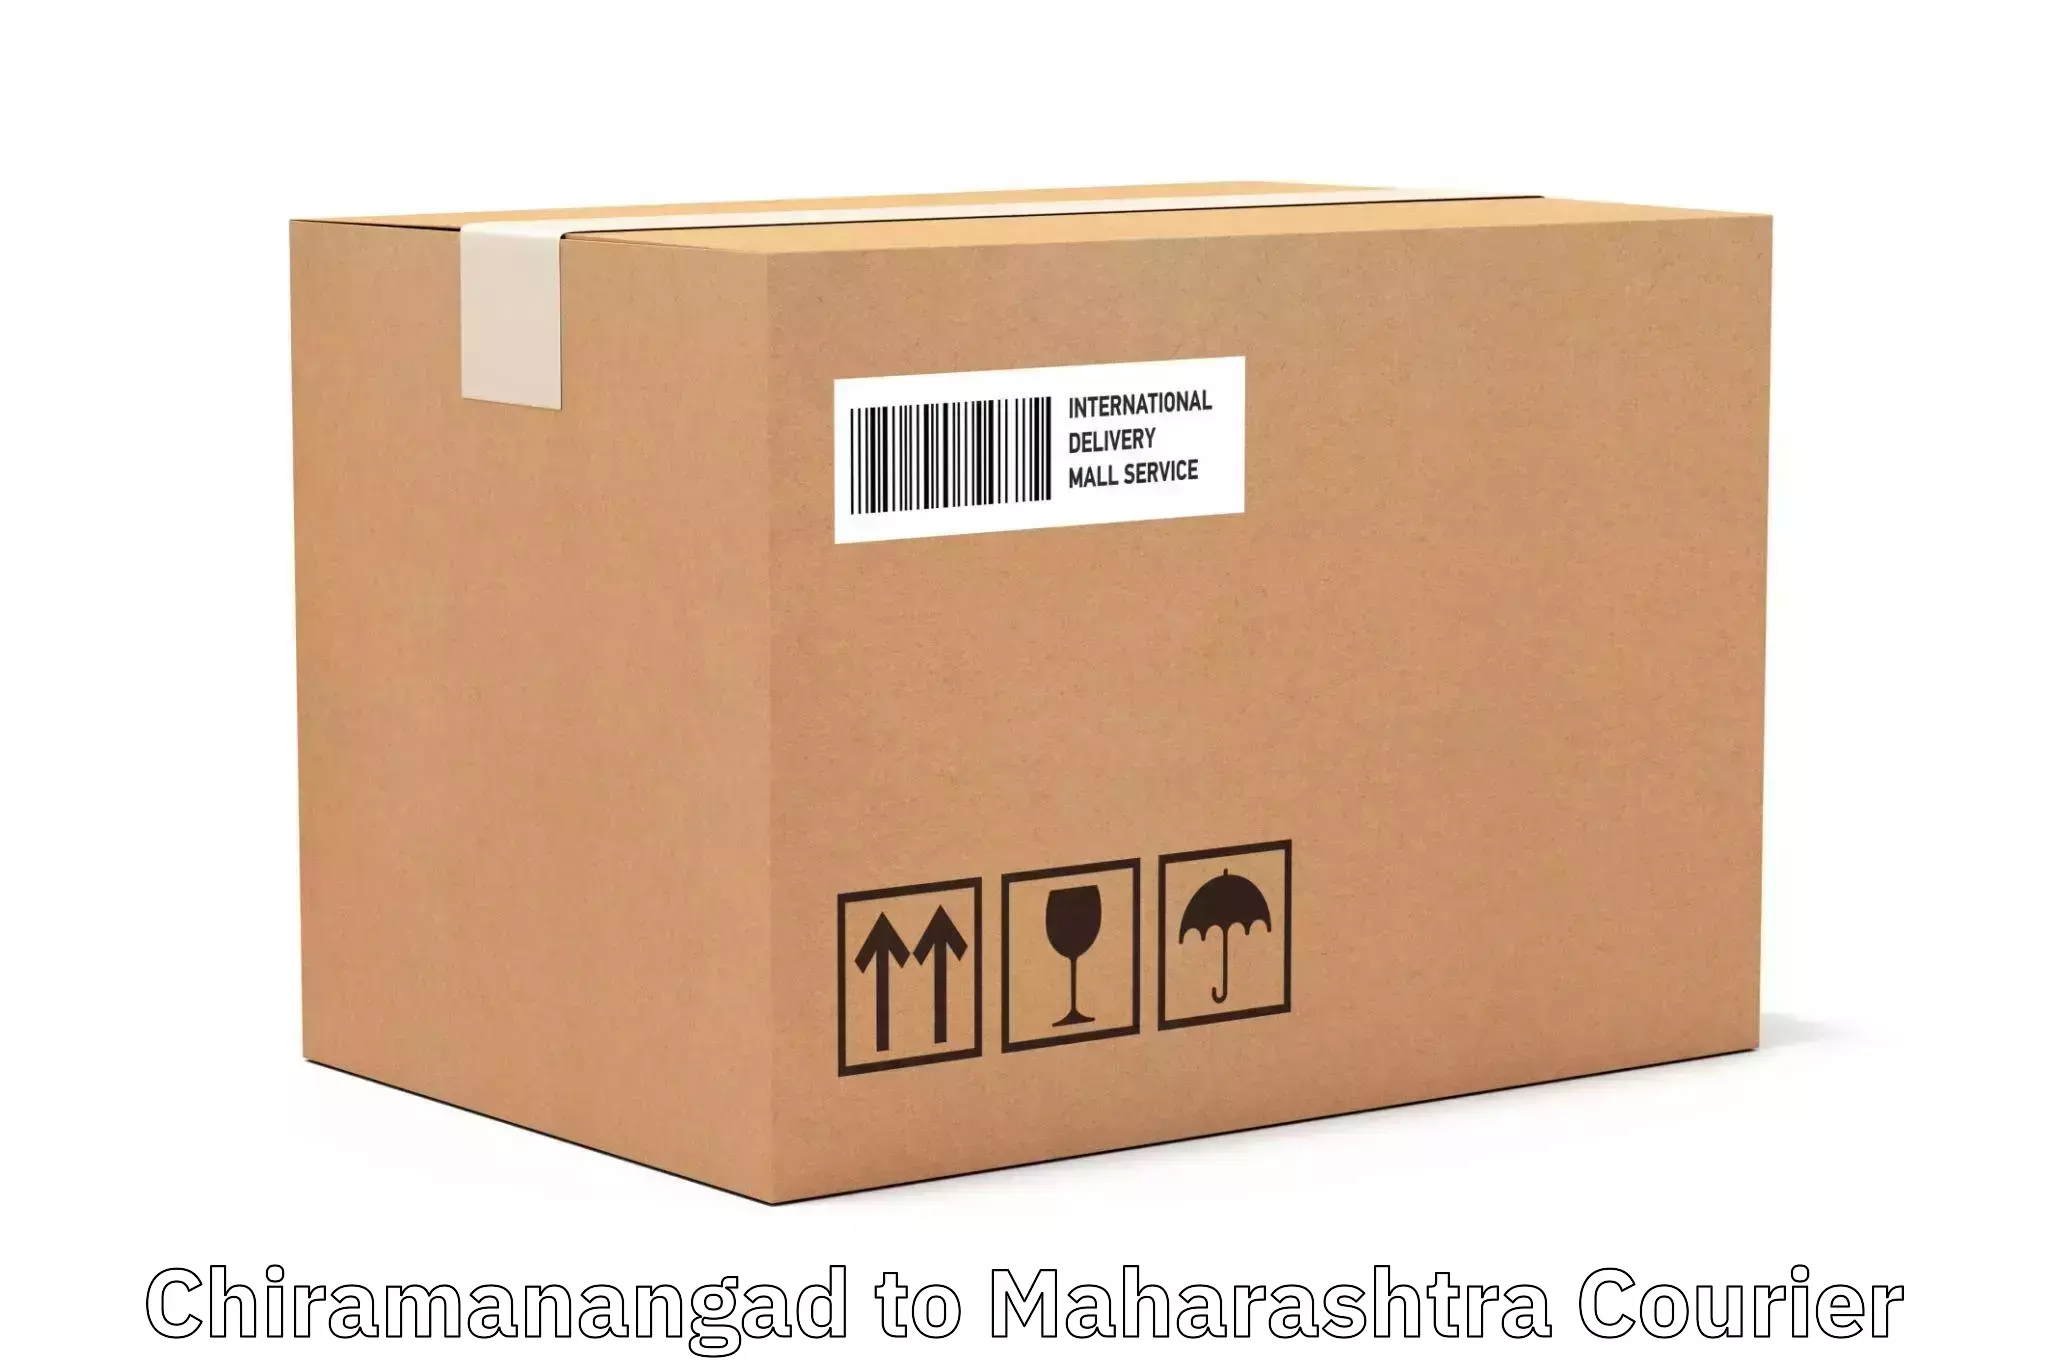 Express logistics providers Chiramanangad to Wardha